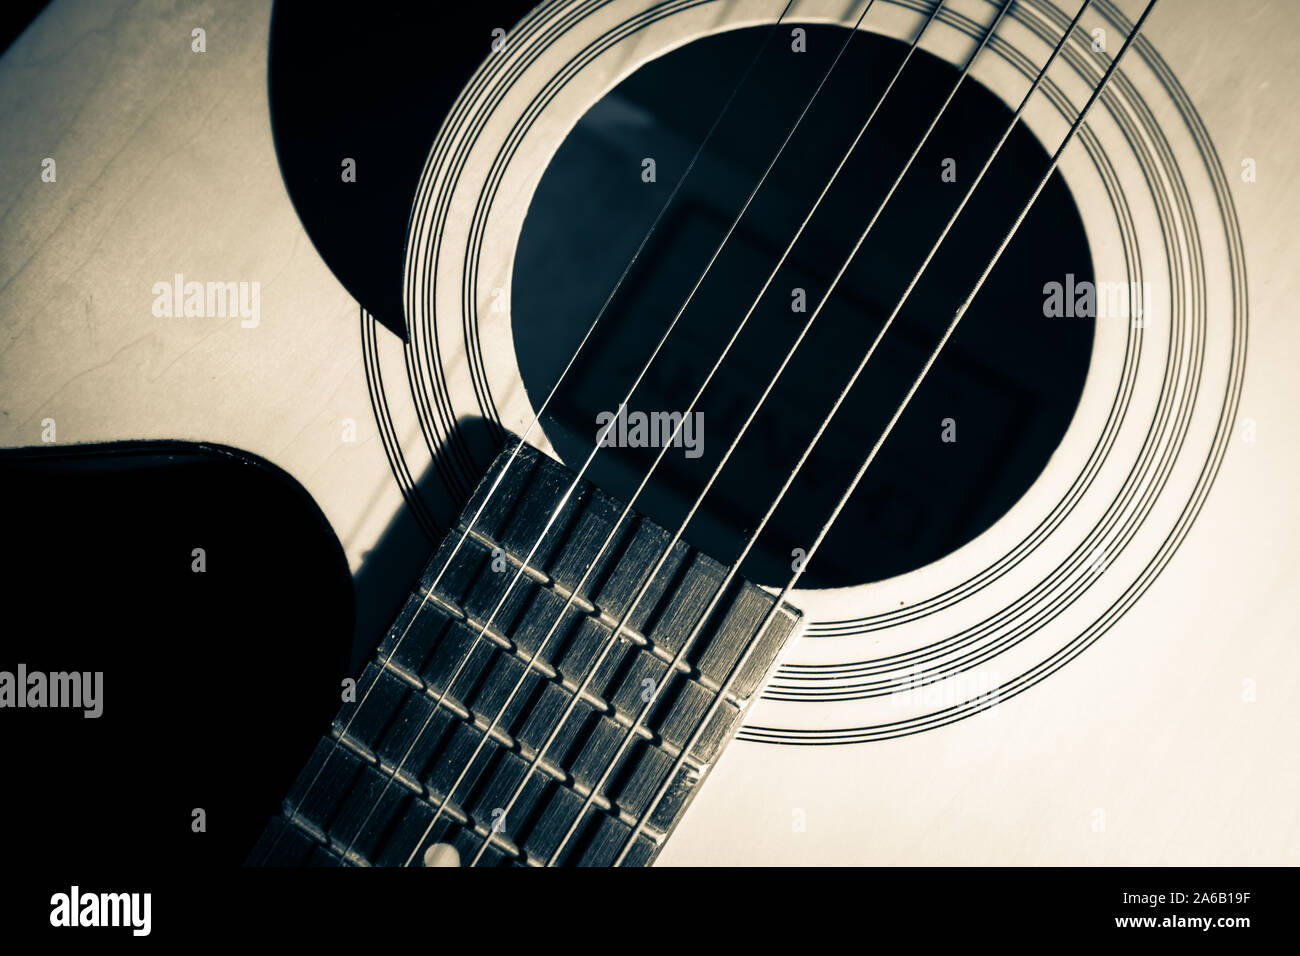 Akustik Gitarre, Stahl- und Nylonsaiten auf einem Standard Holz- Gitarre  isoliert Stockfotografie - Alamy